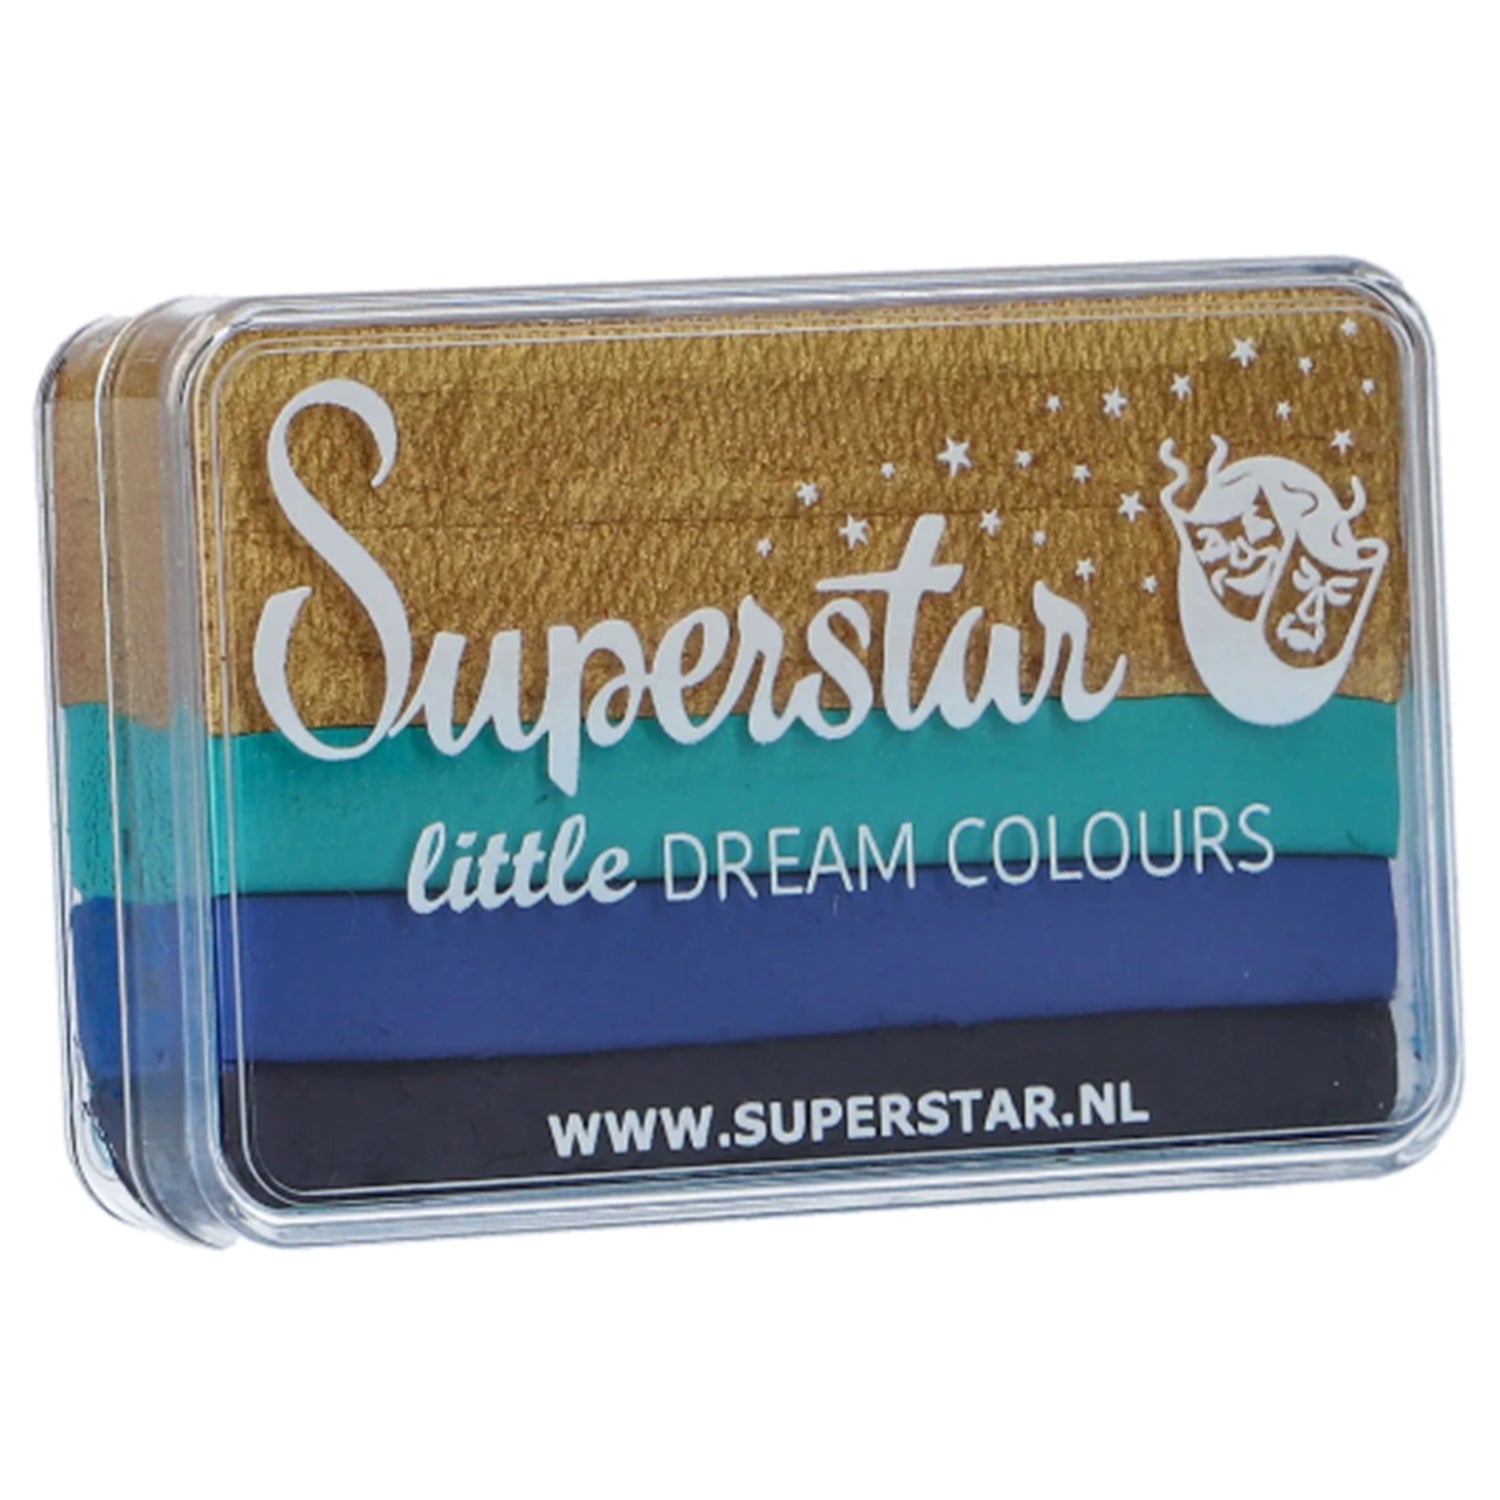 Superstar Little Dream Colours Rainbow Cake - Little Royal (30 gm)